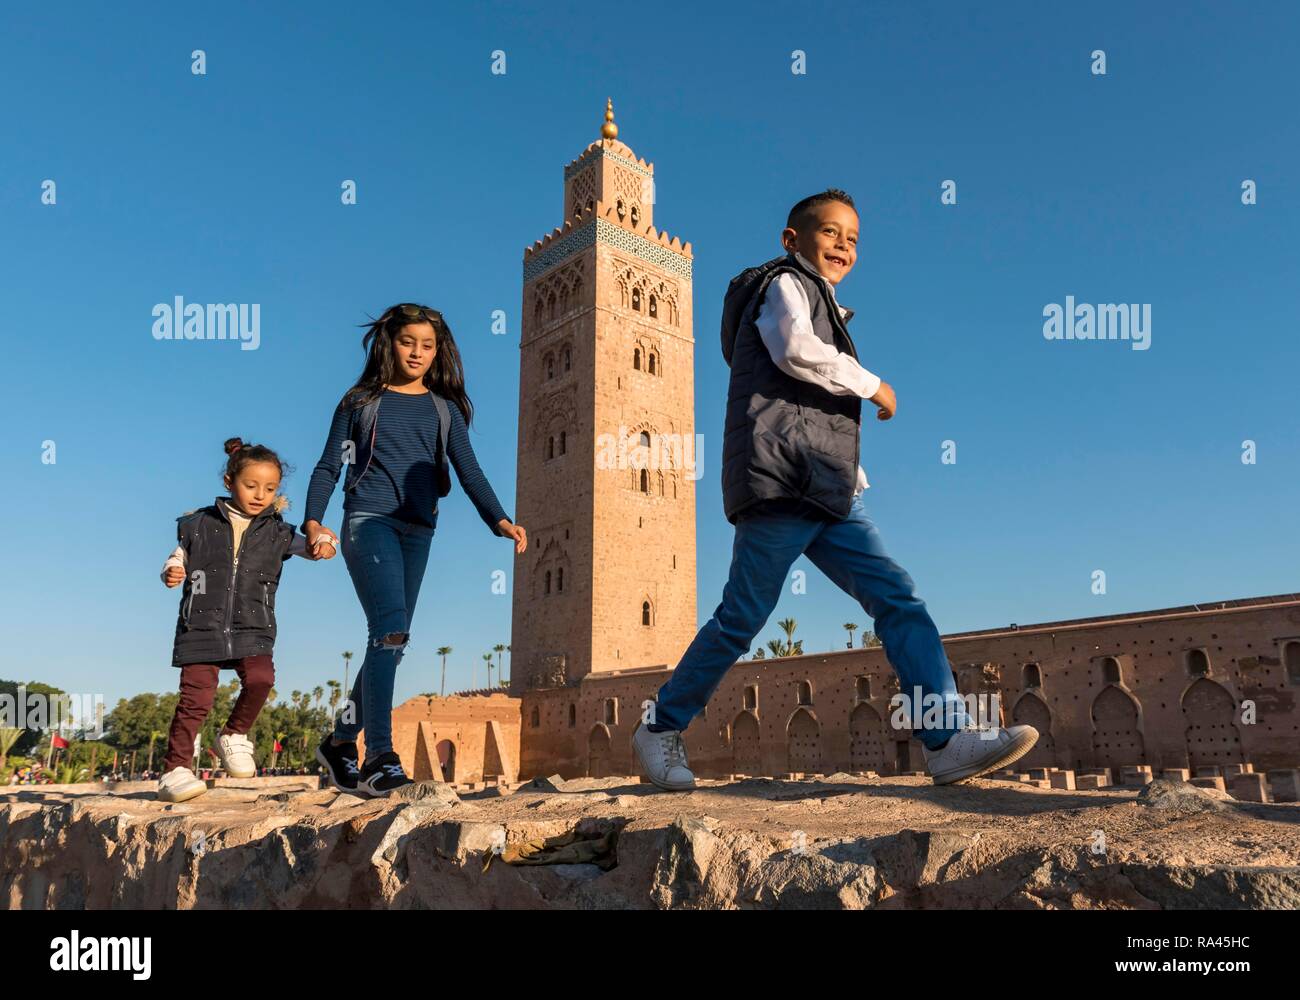 Marrocan children play outside Koutoubia Mosque, Marrakech, Morocco Stock Photo